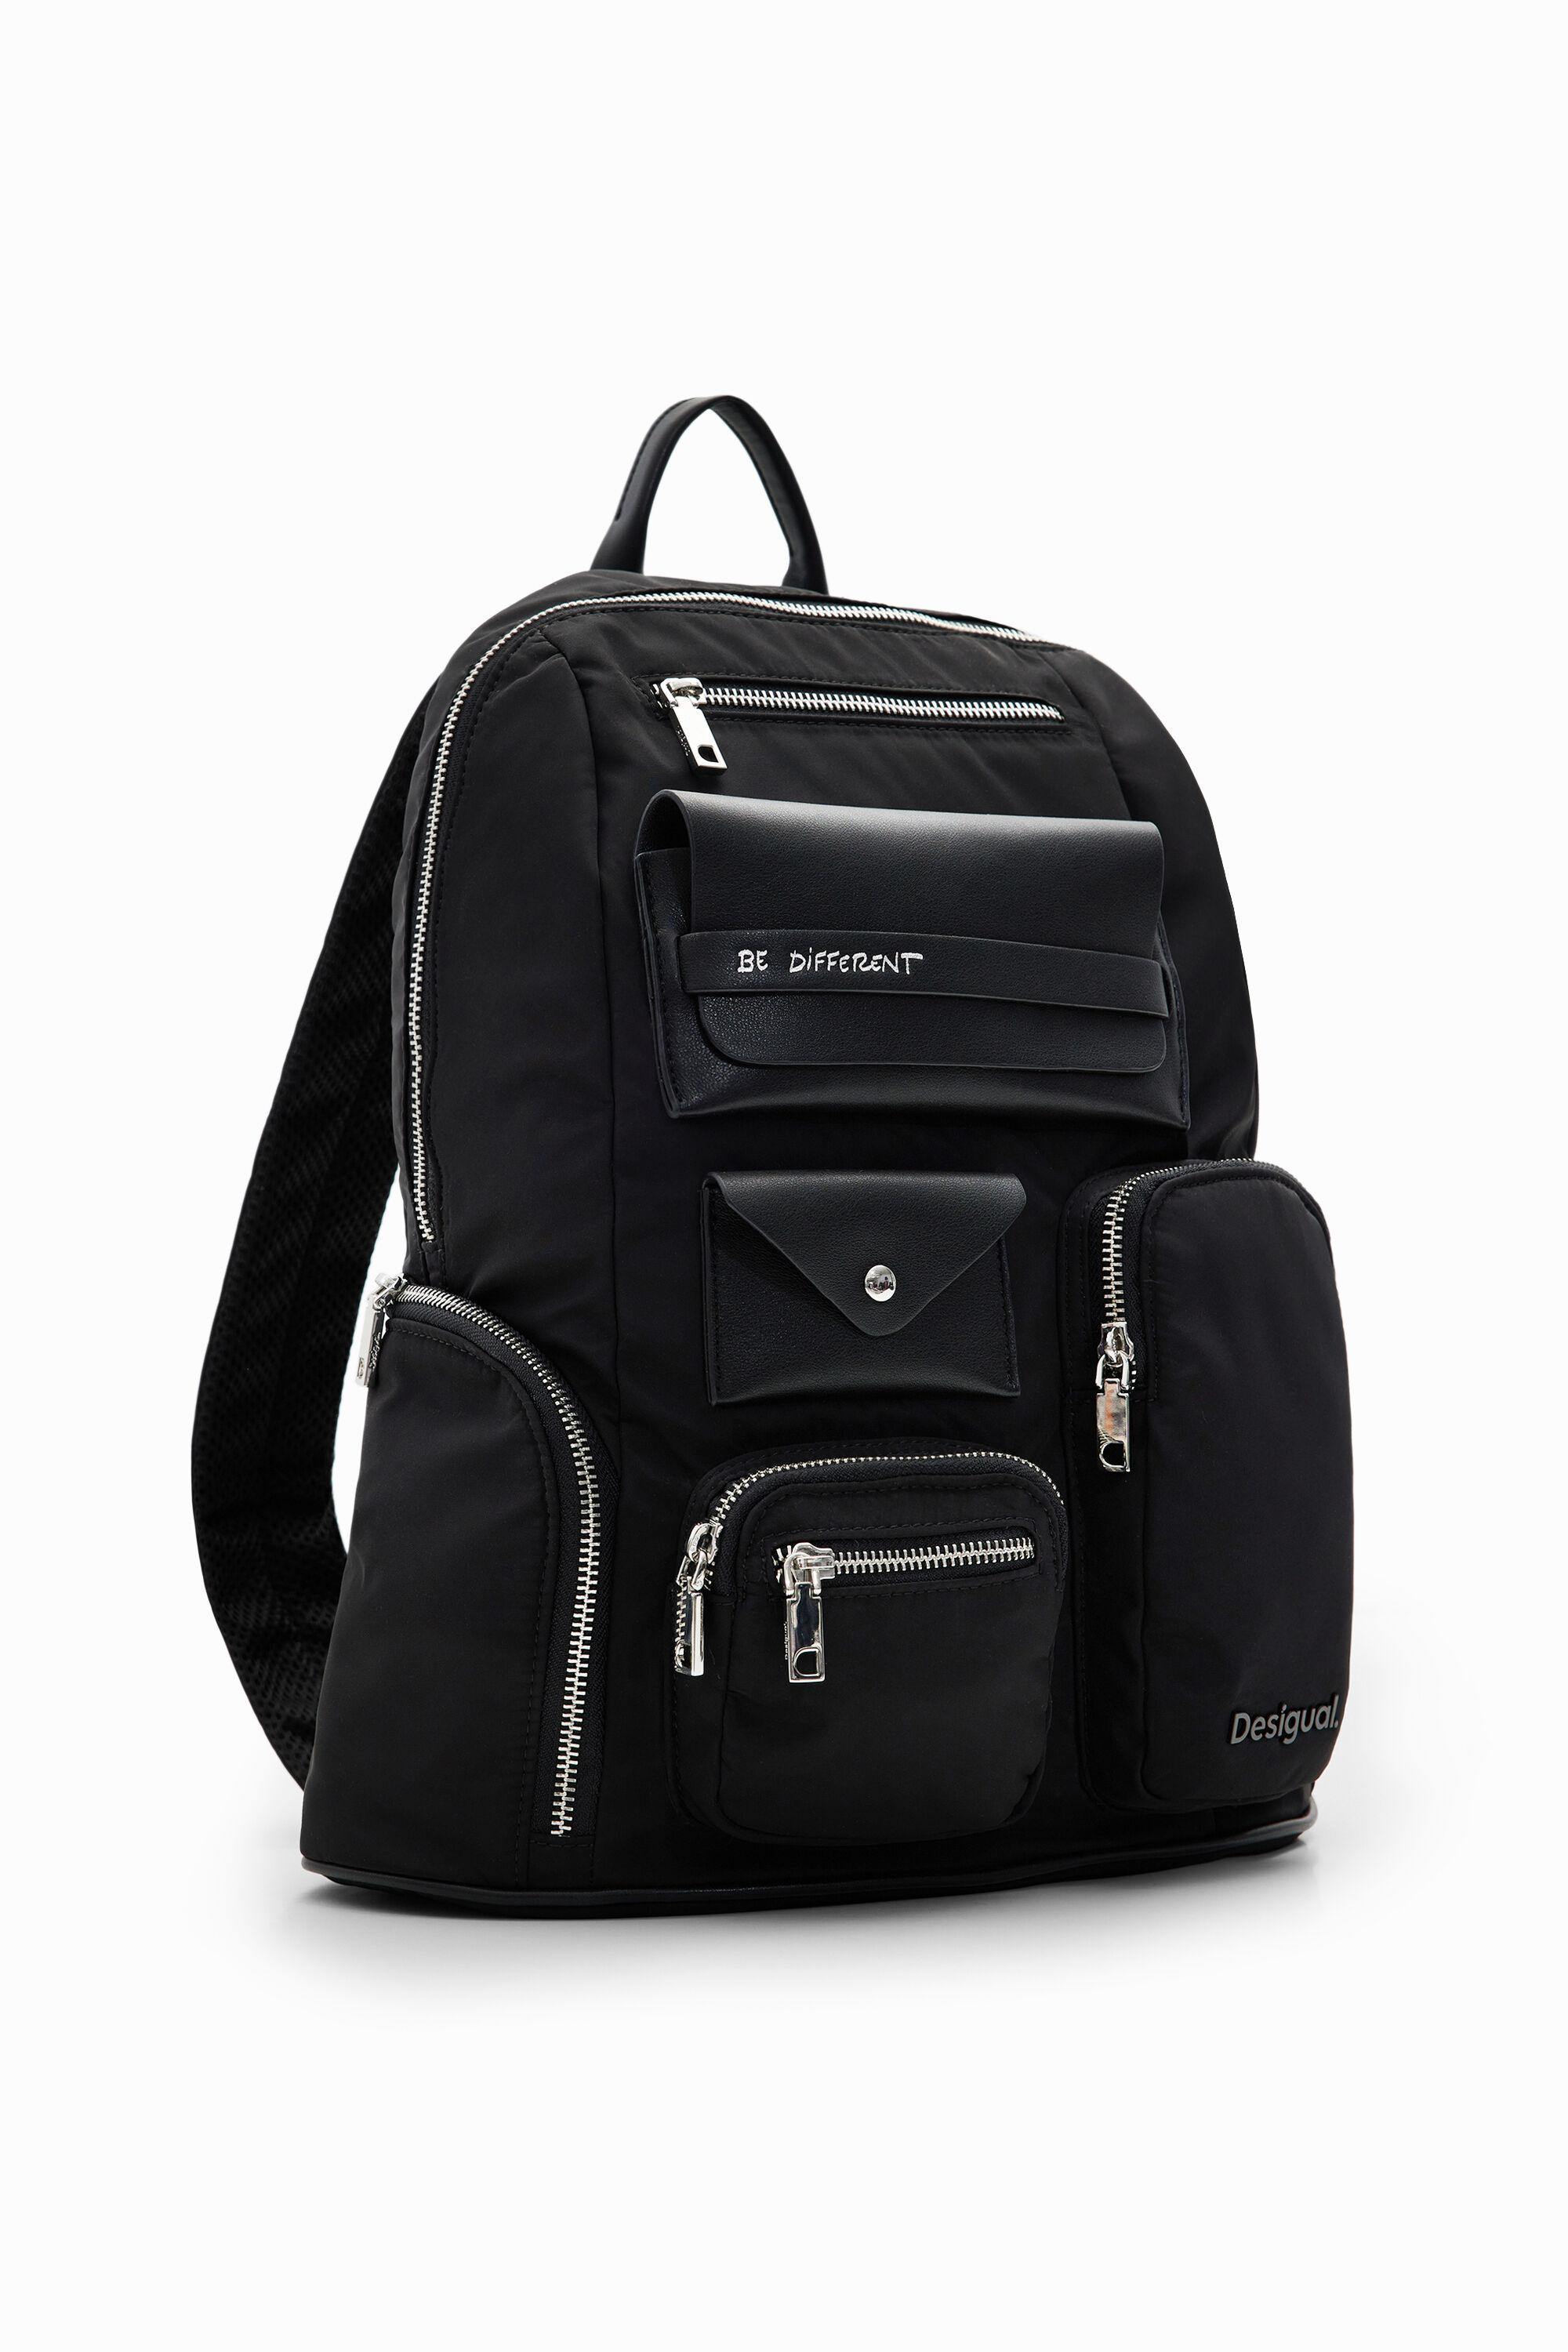 Desigual Large Nylon Pockets Backpack in Black | Lyst